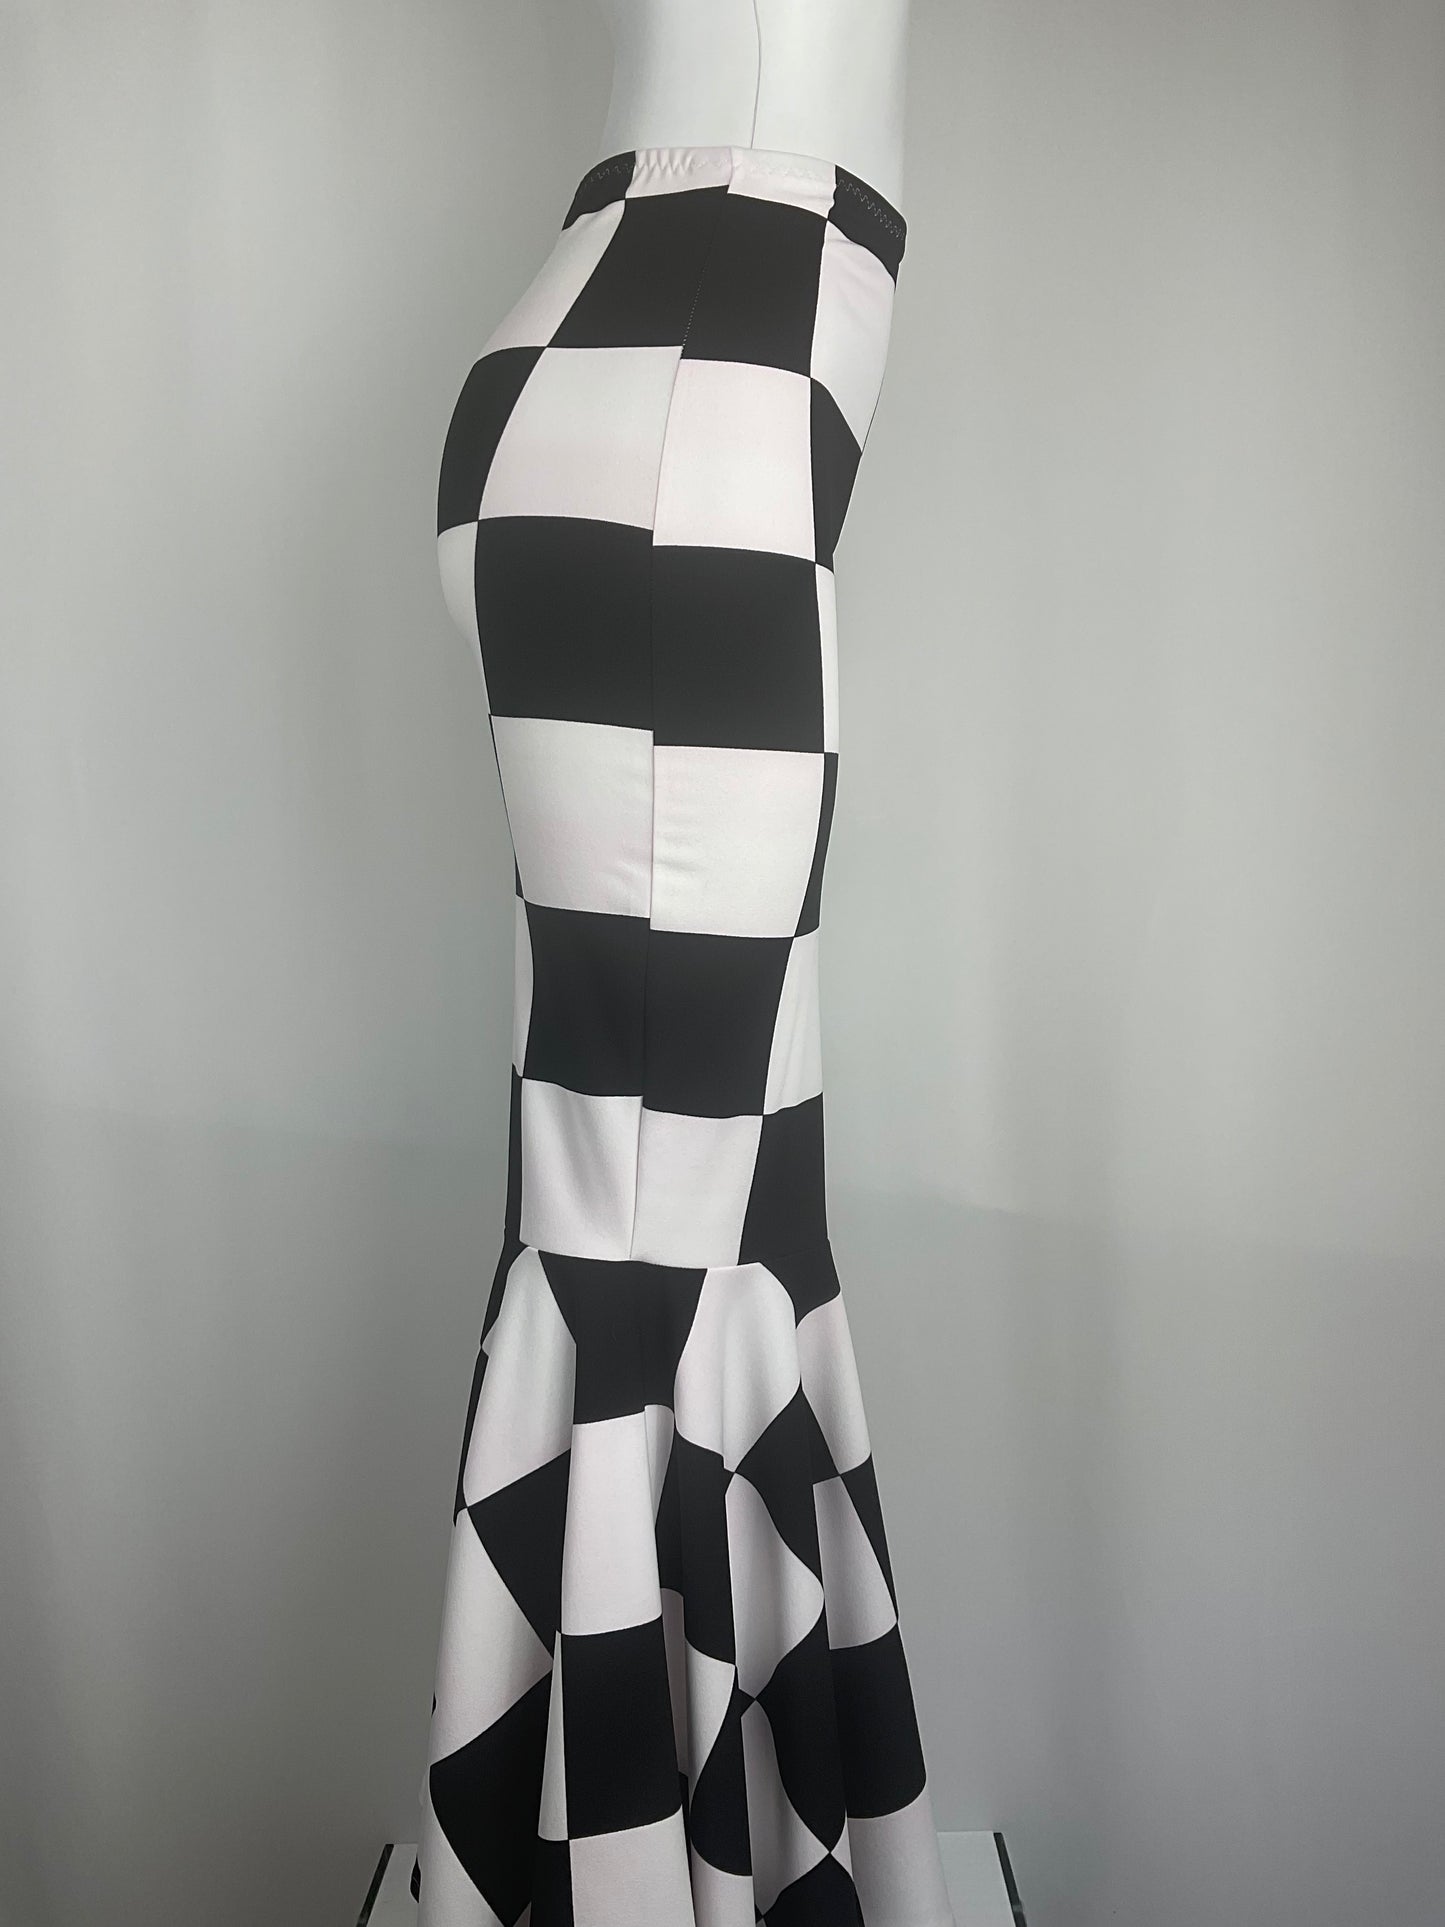 Checkered Skirt